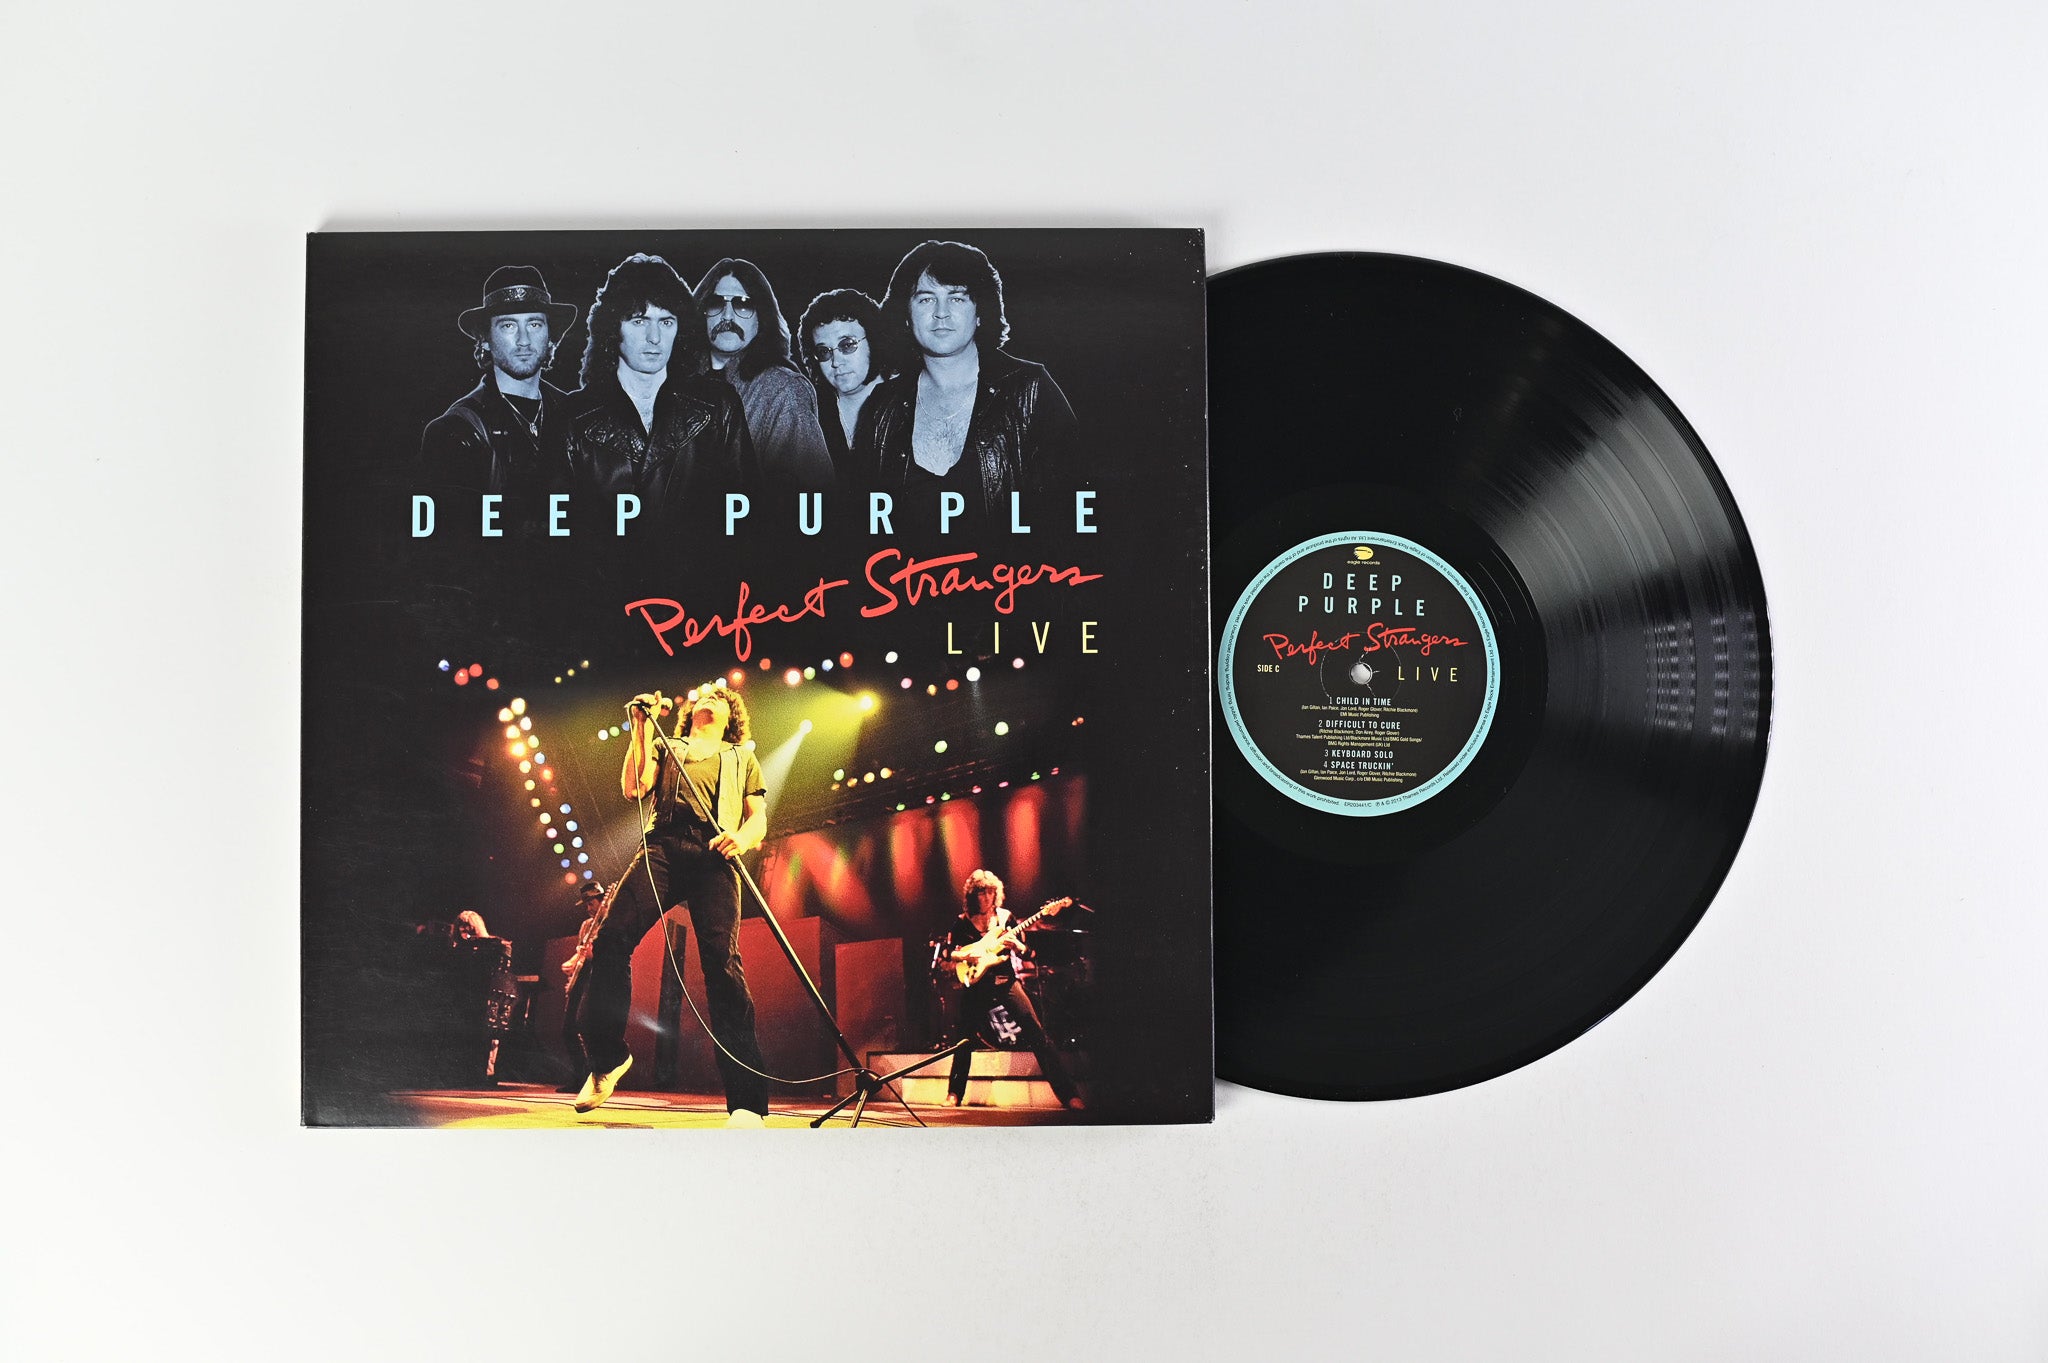 Deep Purple - Perfect Strangers - Live